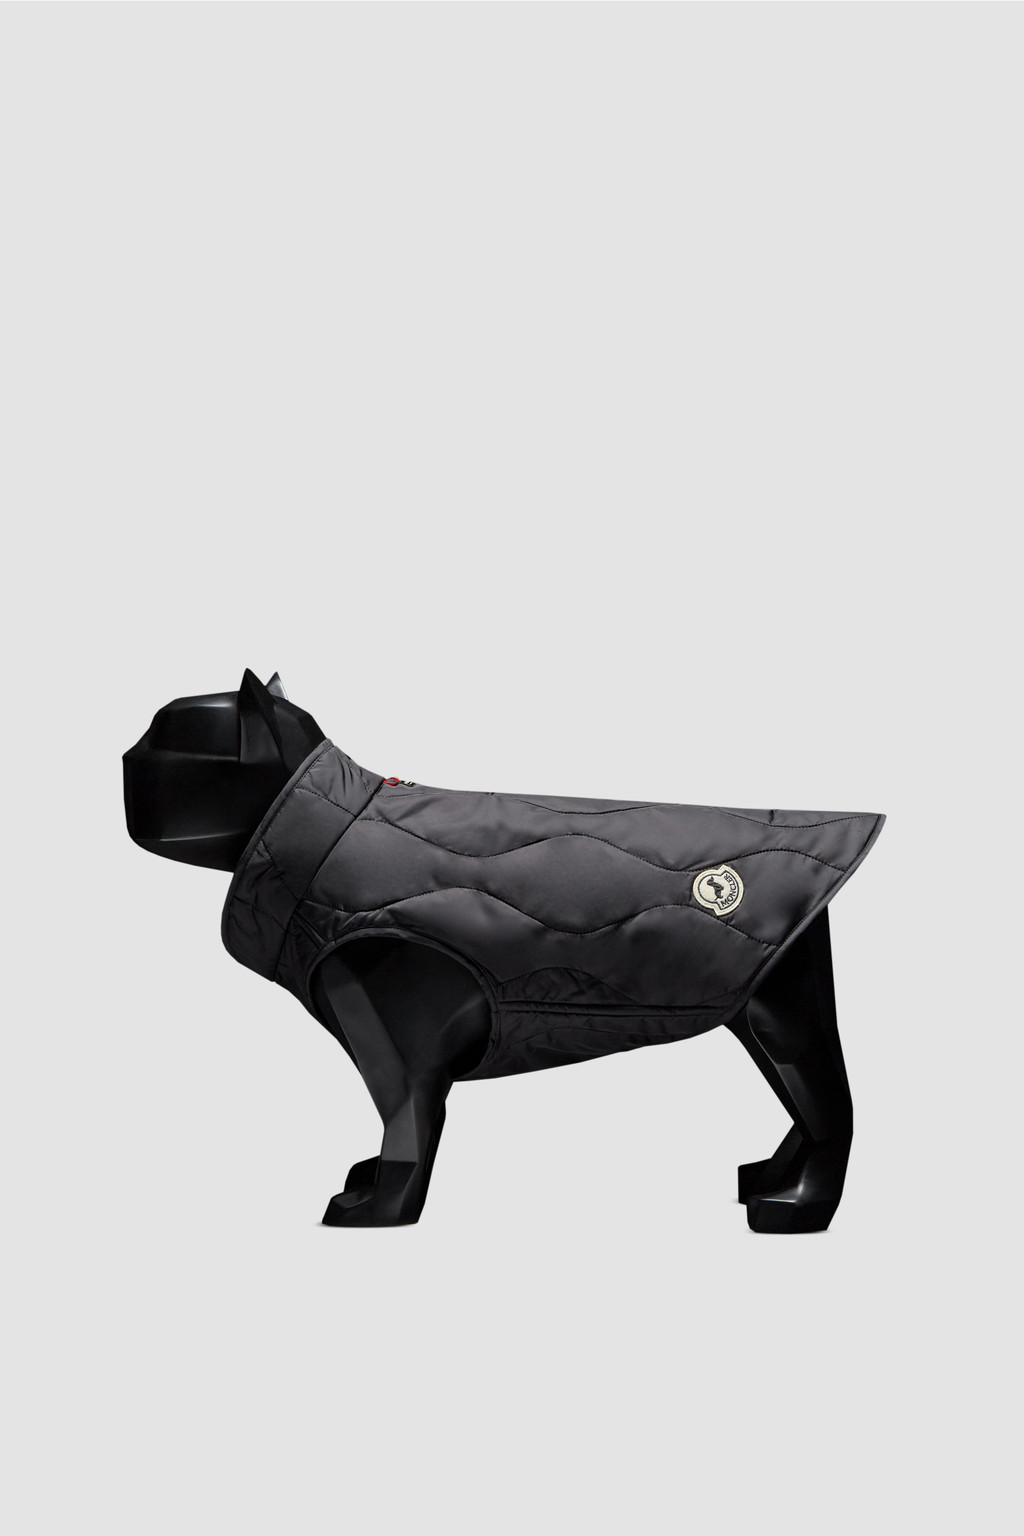 For Dogwear | Moncler US